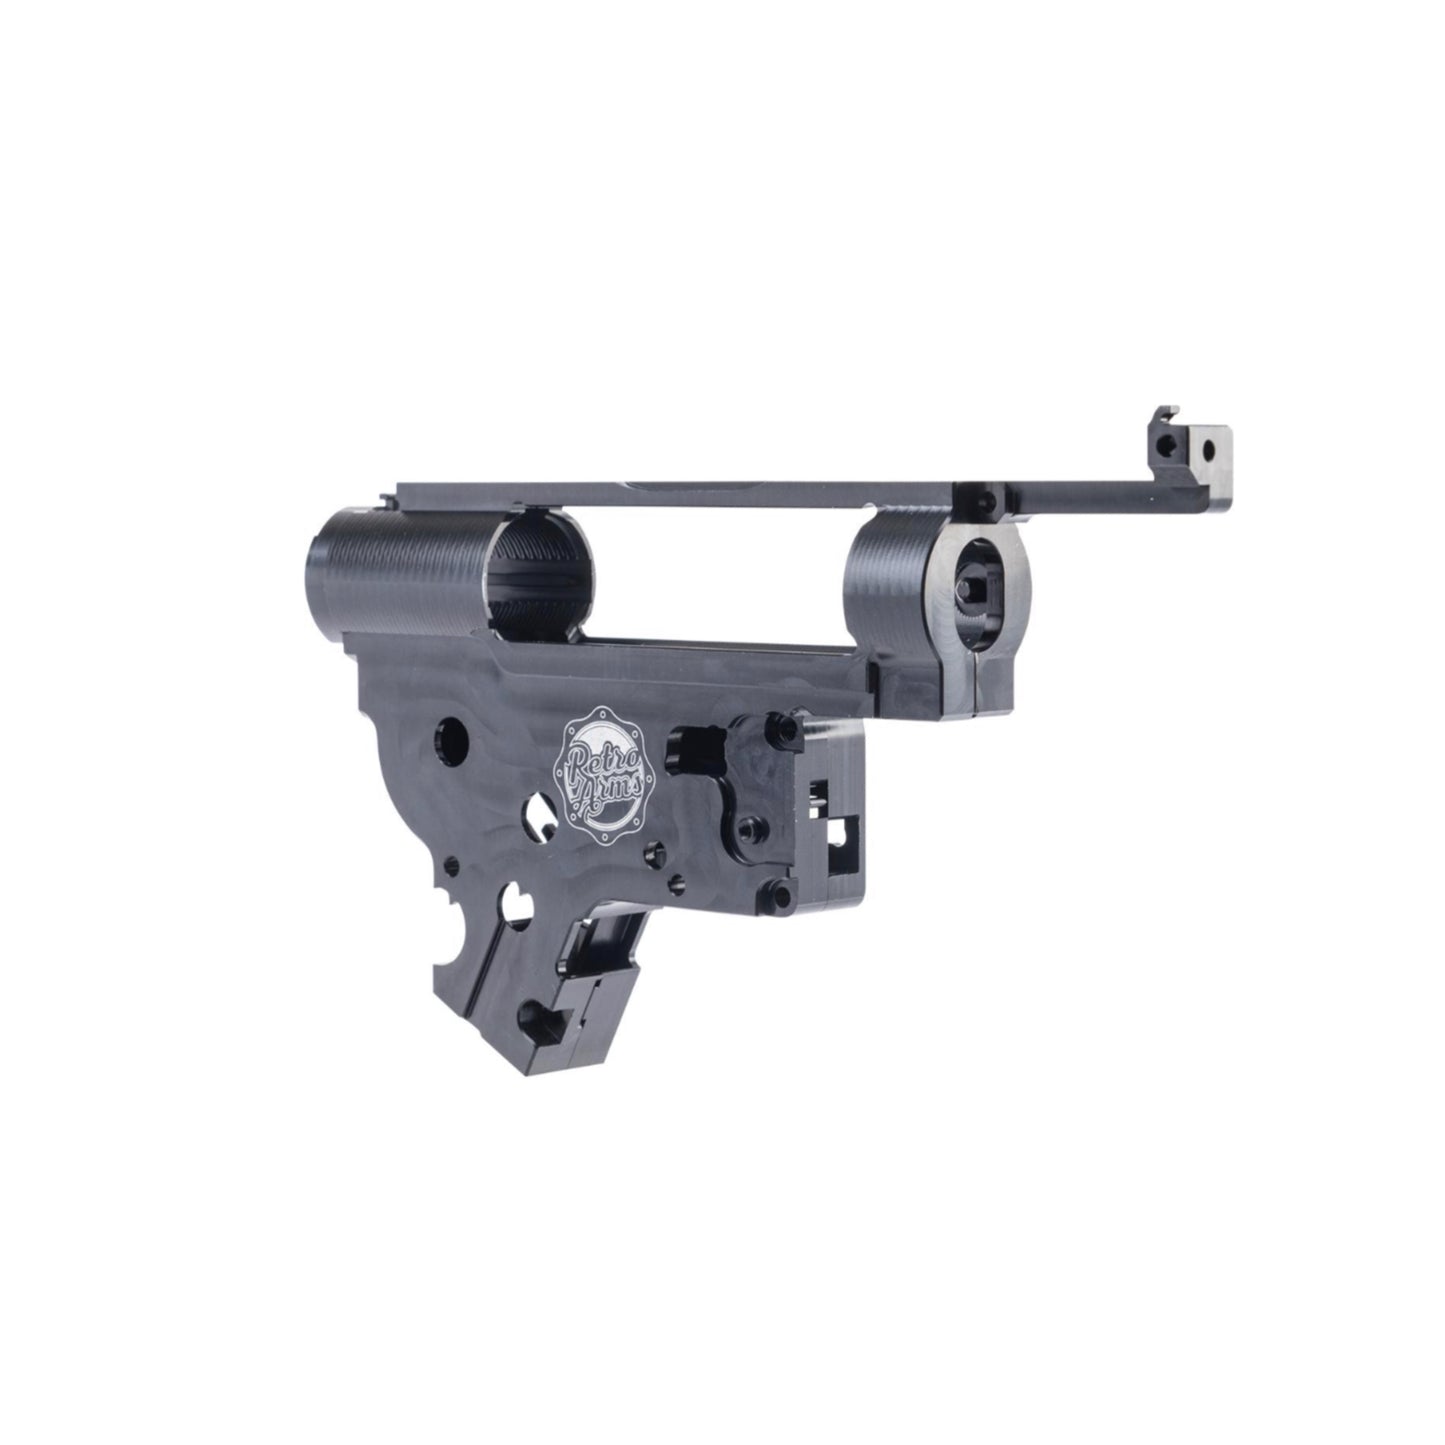 Retro Arms CNC SOPMOD M4 NGRS Gearbox 8mm